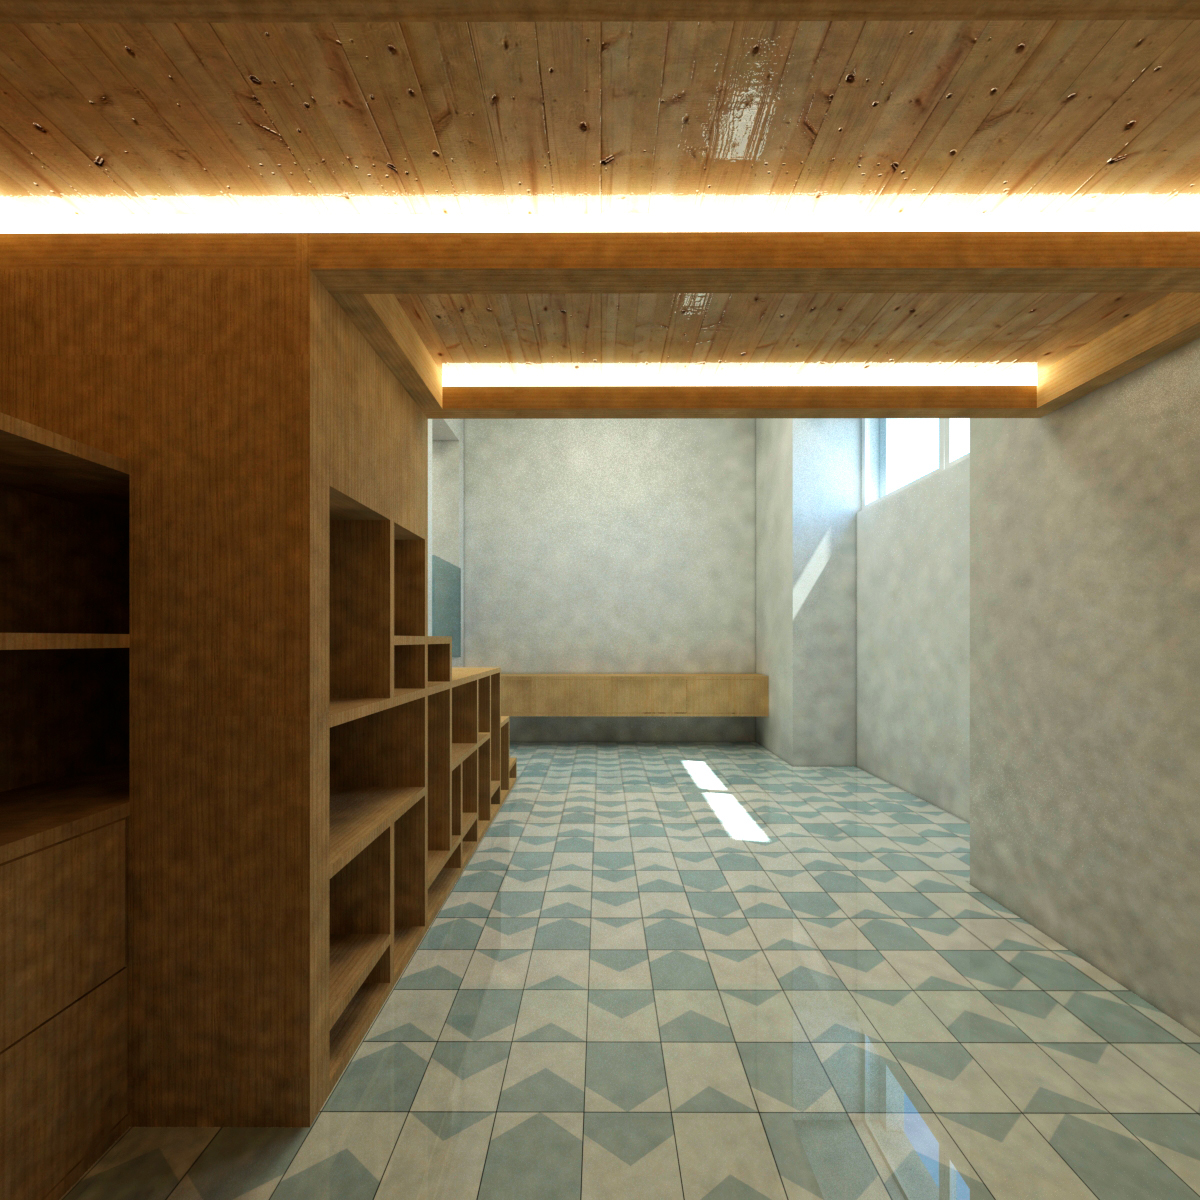 refurbishment cement tiles taylor made wood Lisbon minimal interior design  mezzanine home office overdesign